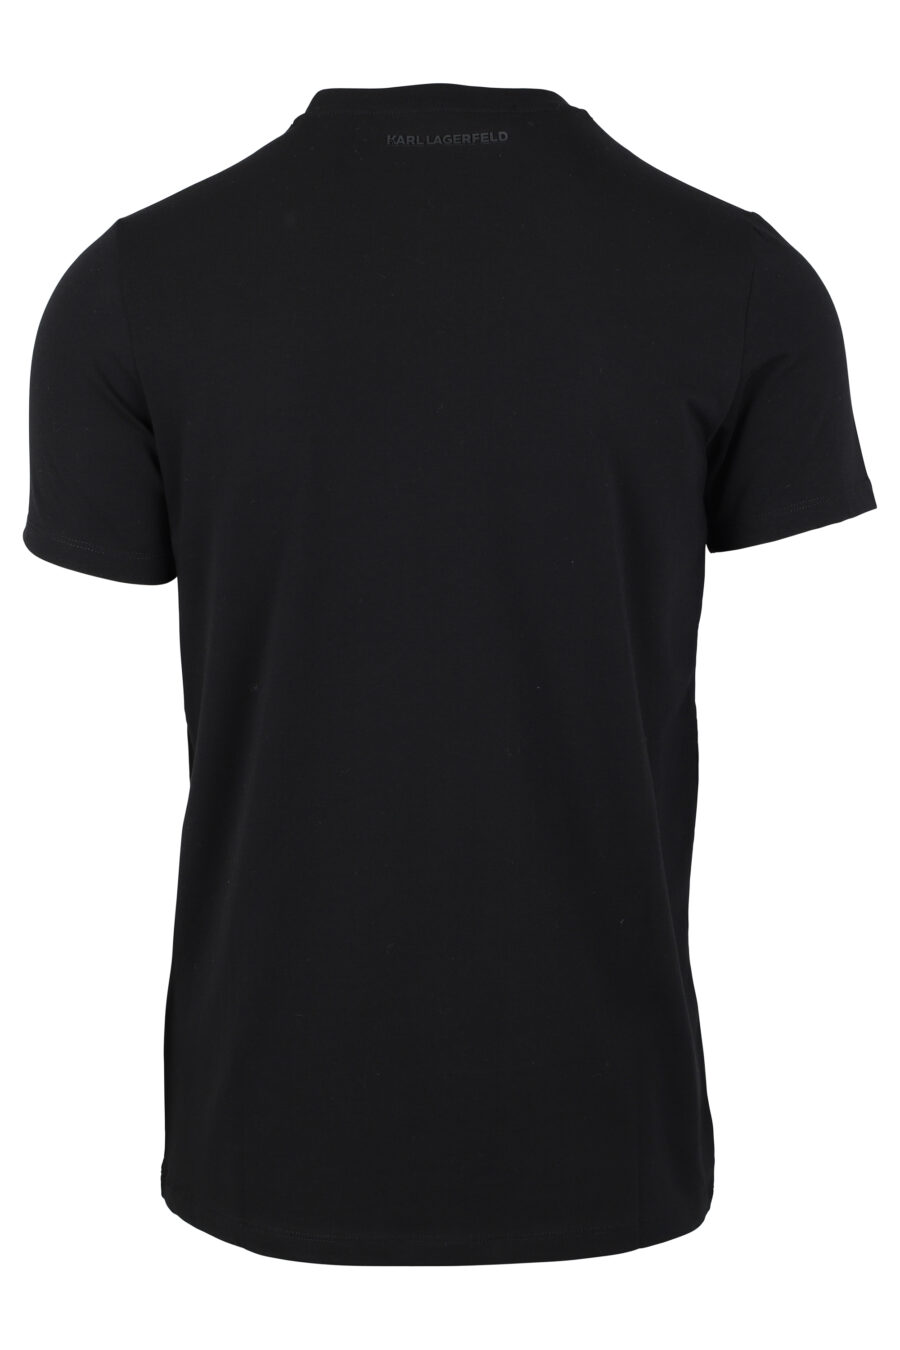 T-shirt preta com maxilogo "karl" em silhueta laranja - IMG 4693